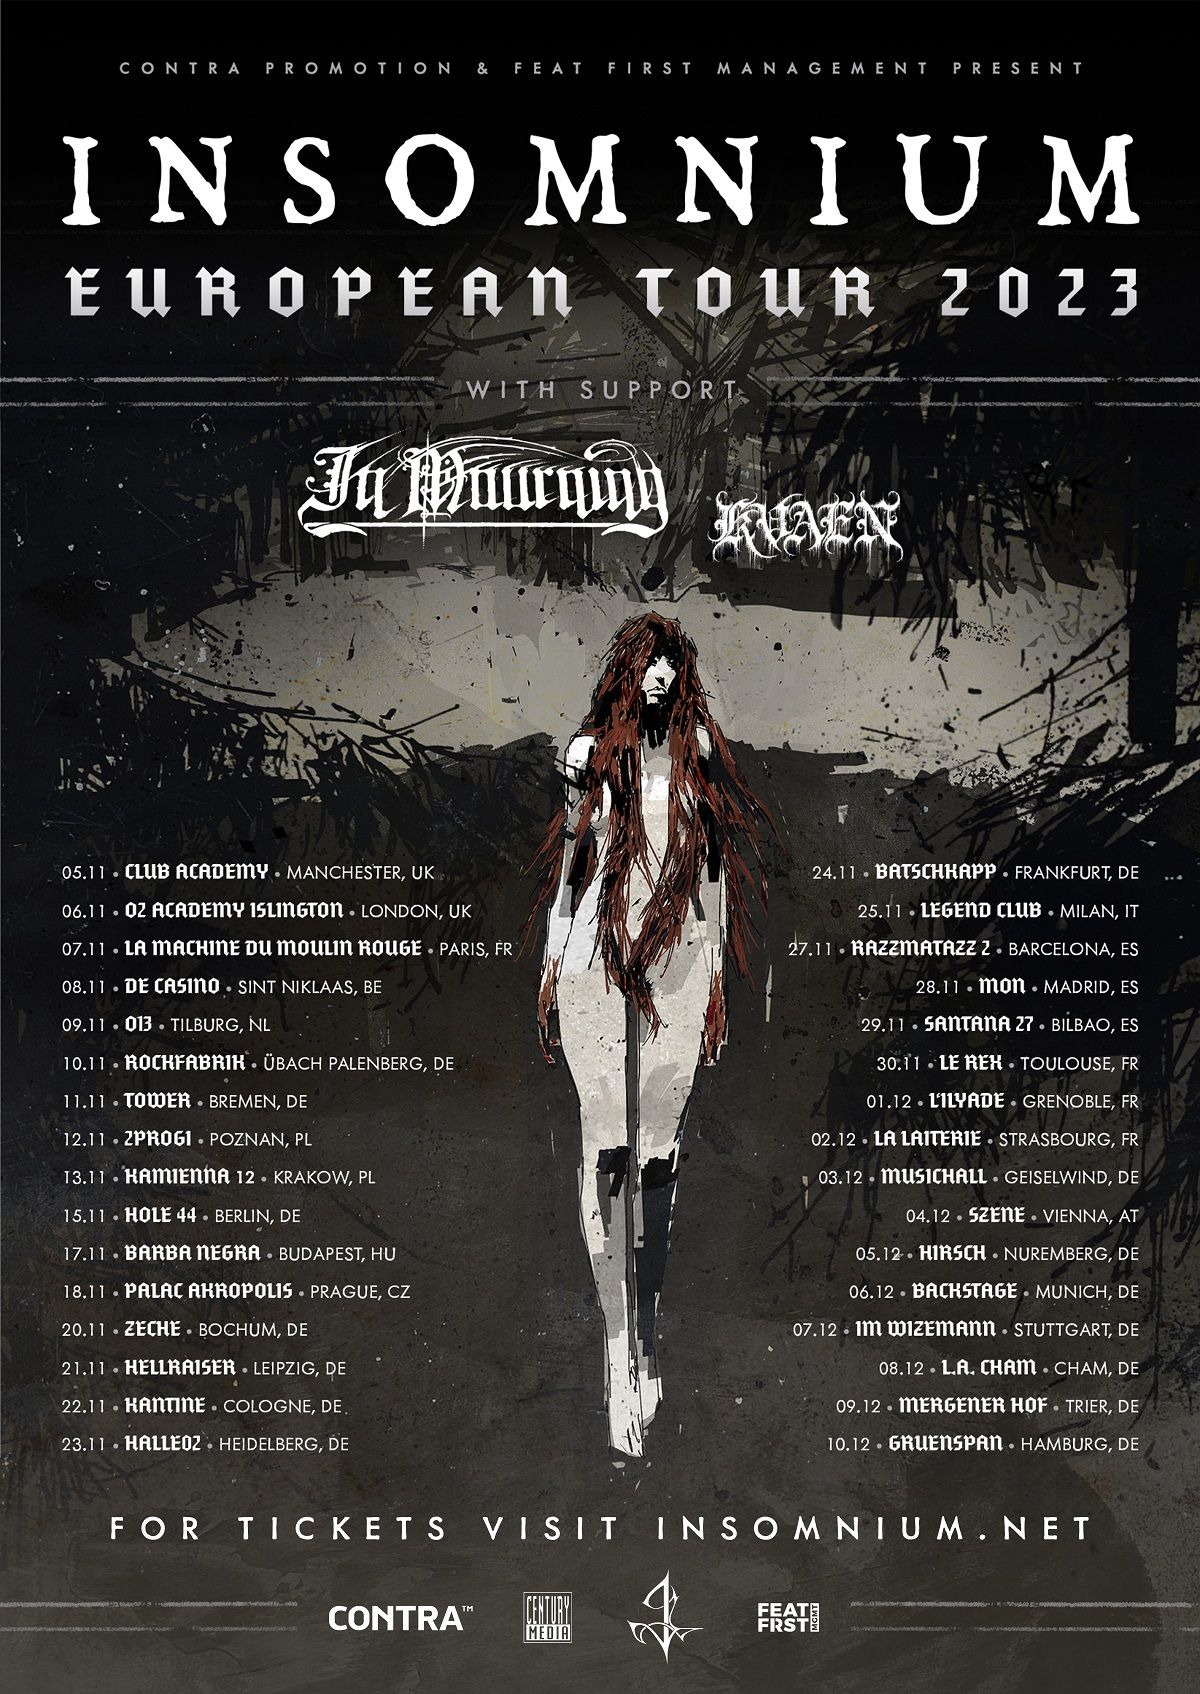 bands european tour 2023